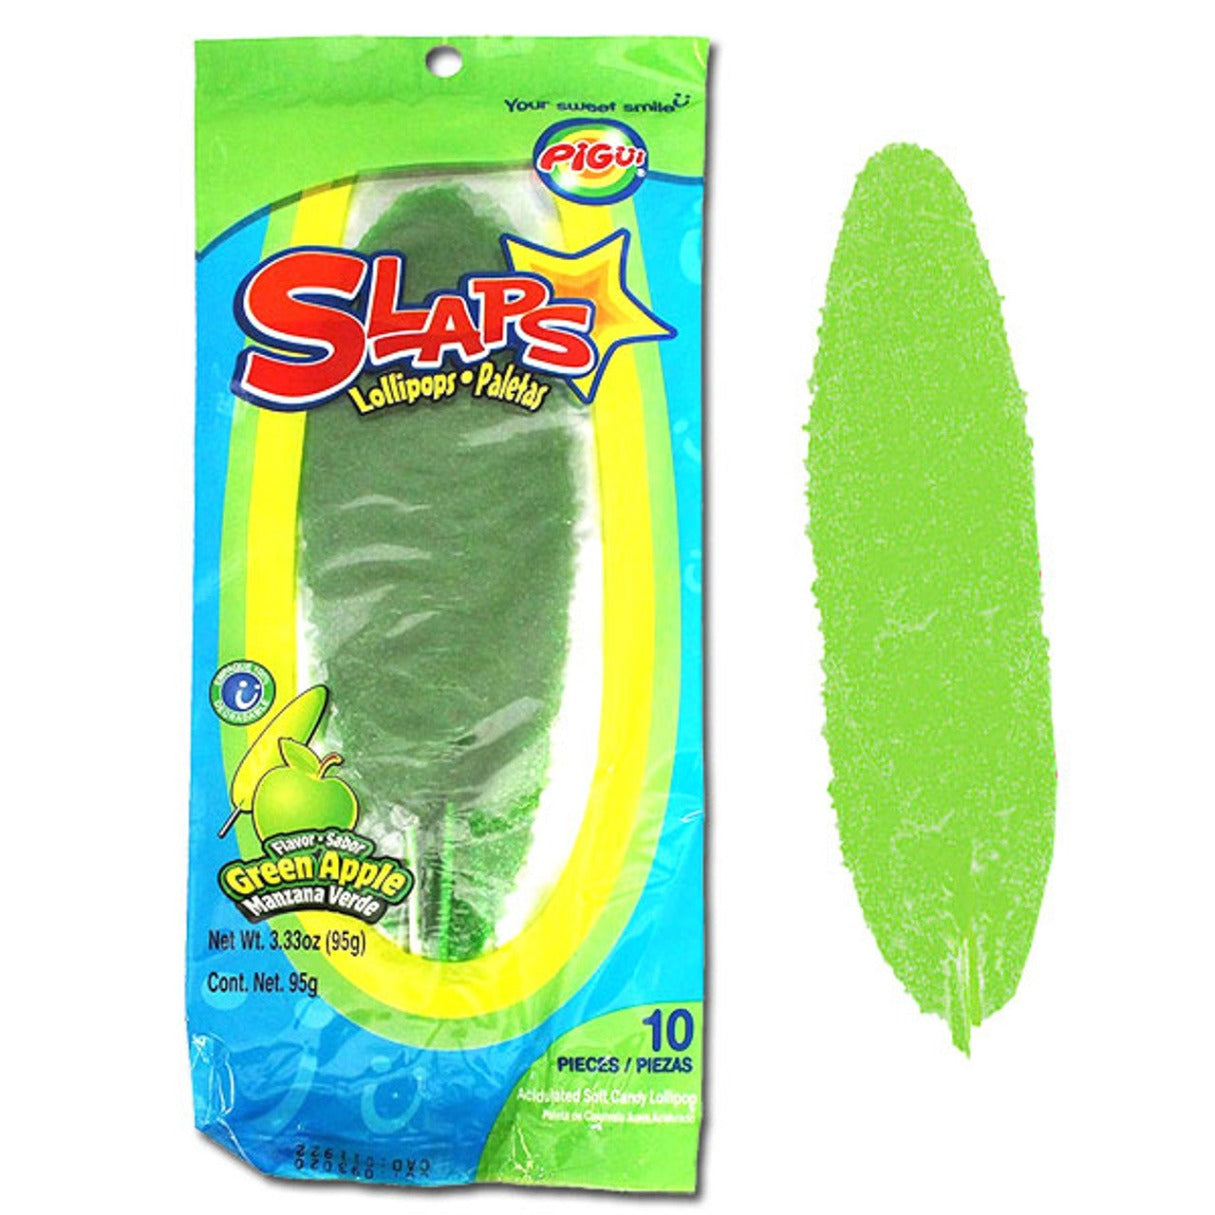 Slaps Lollipop Green Apple 3.33oz - 10ct